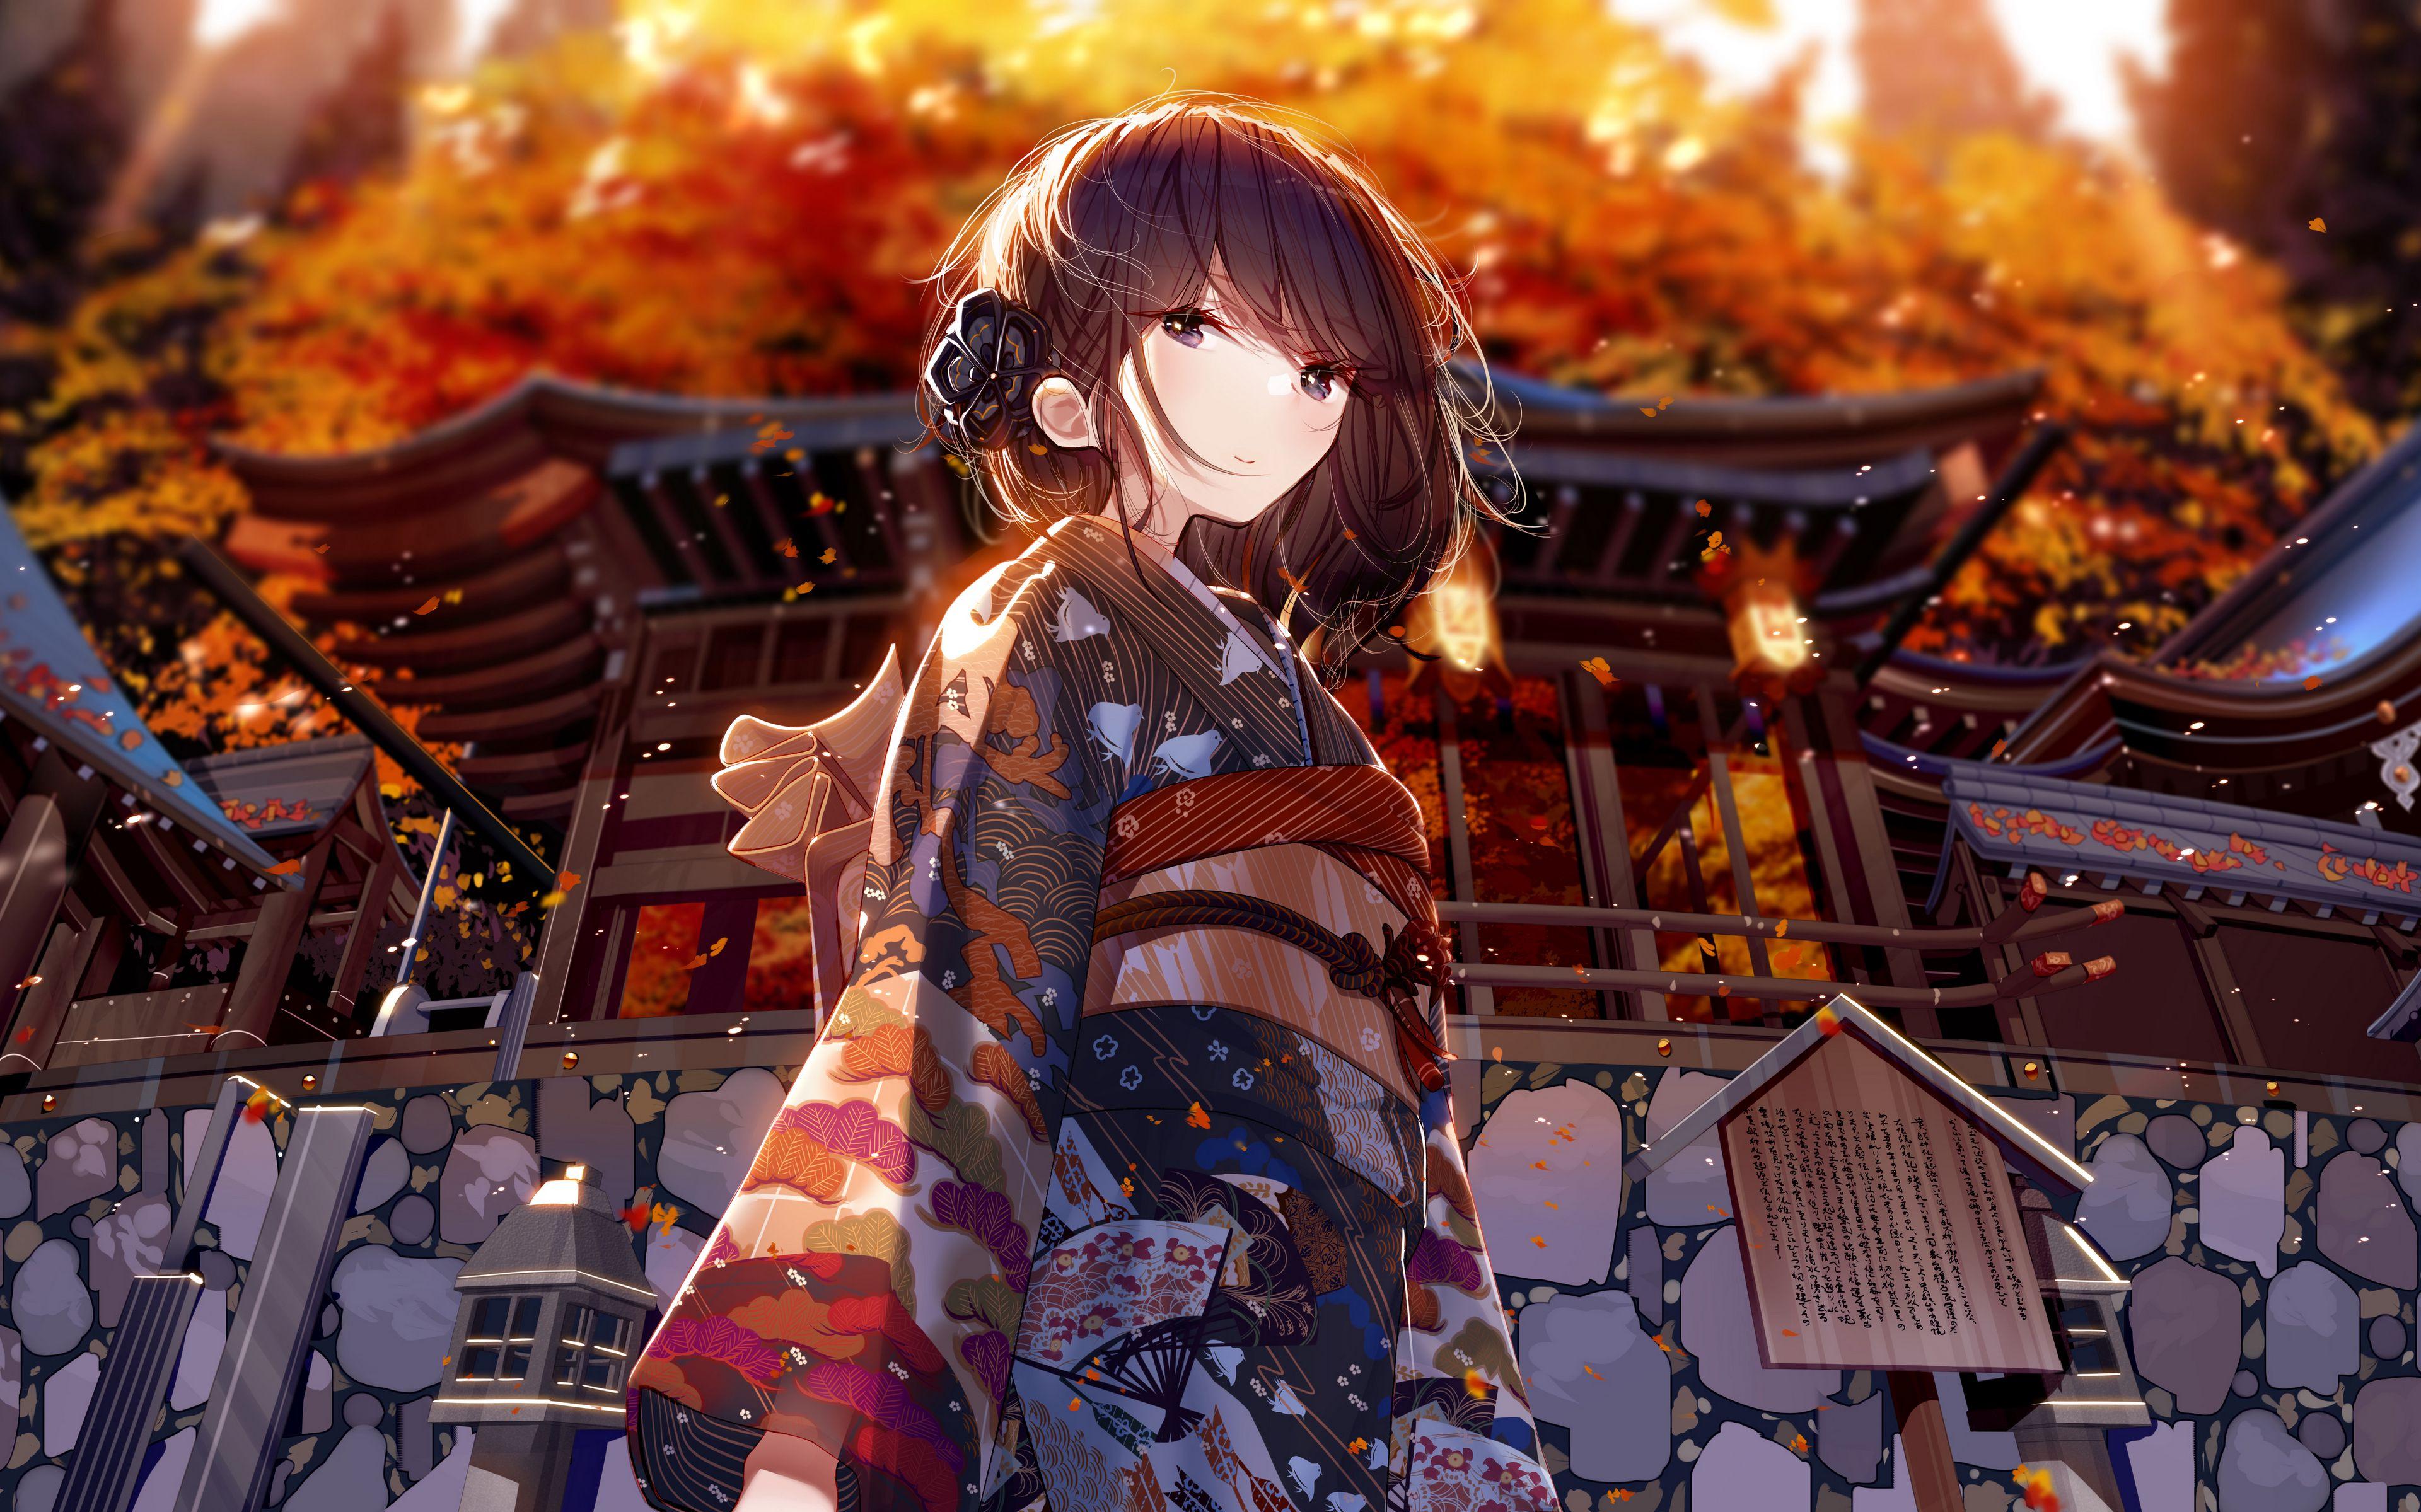 Download wallpaper 3840x2400 girl kimono japan anime 4k ultra